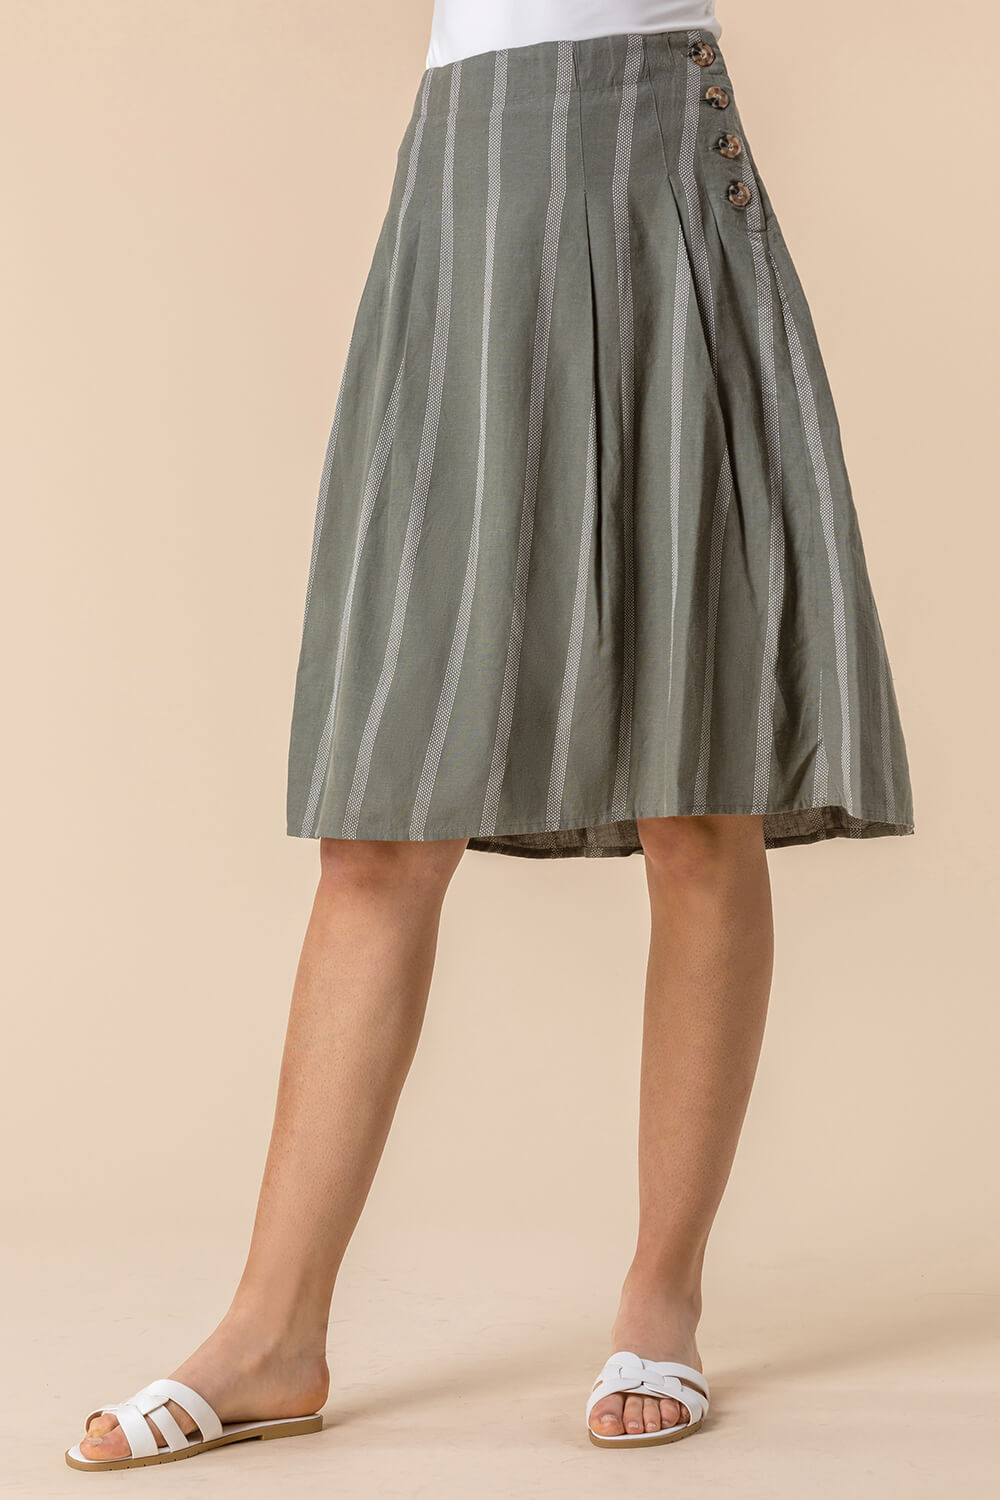 KHAKI Stripe Print Button A-Line Skirt, Image 2 of 4